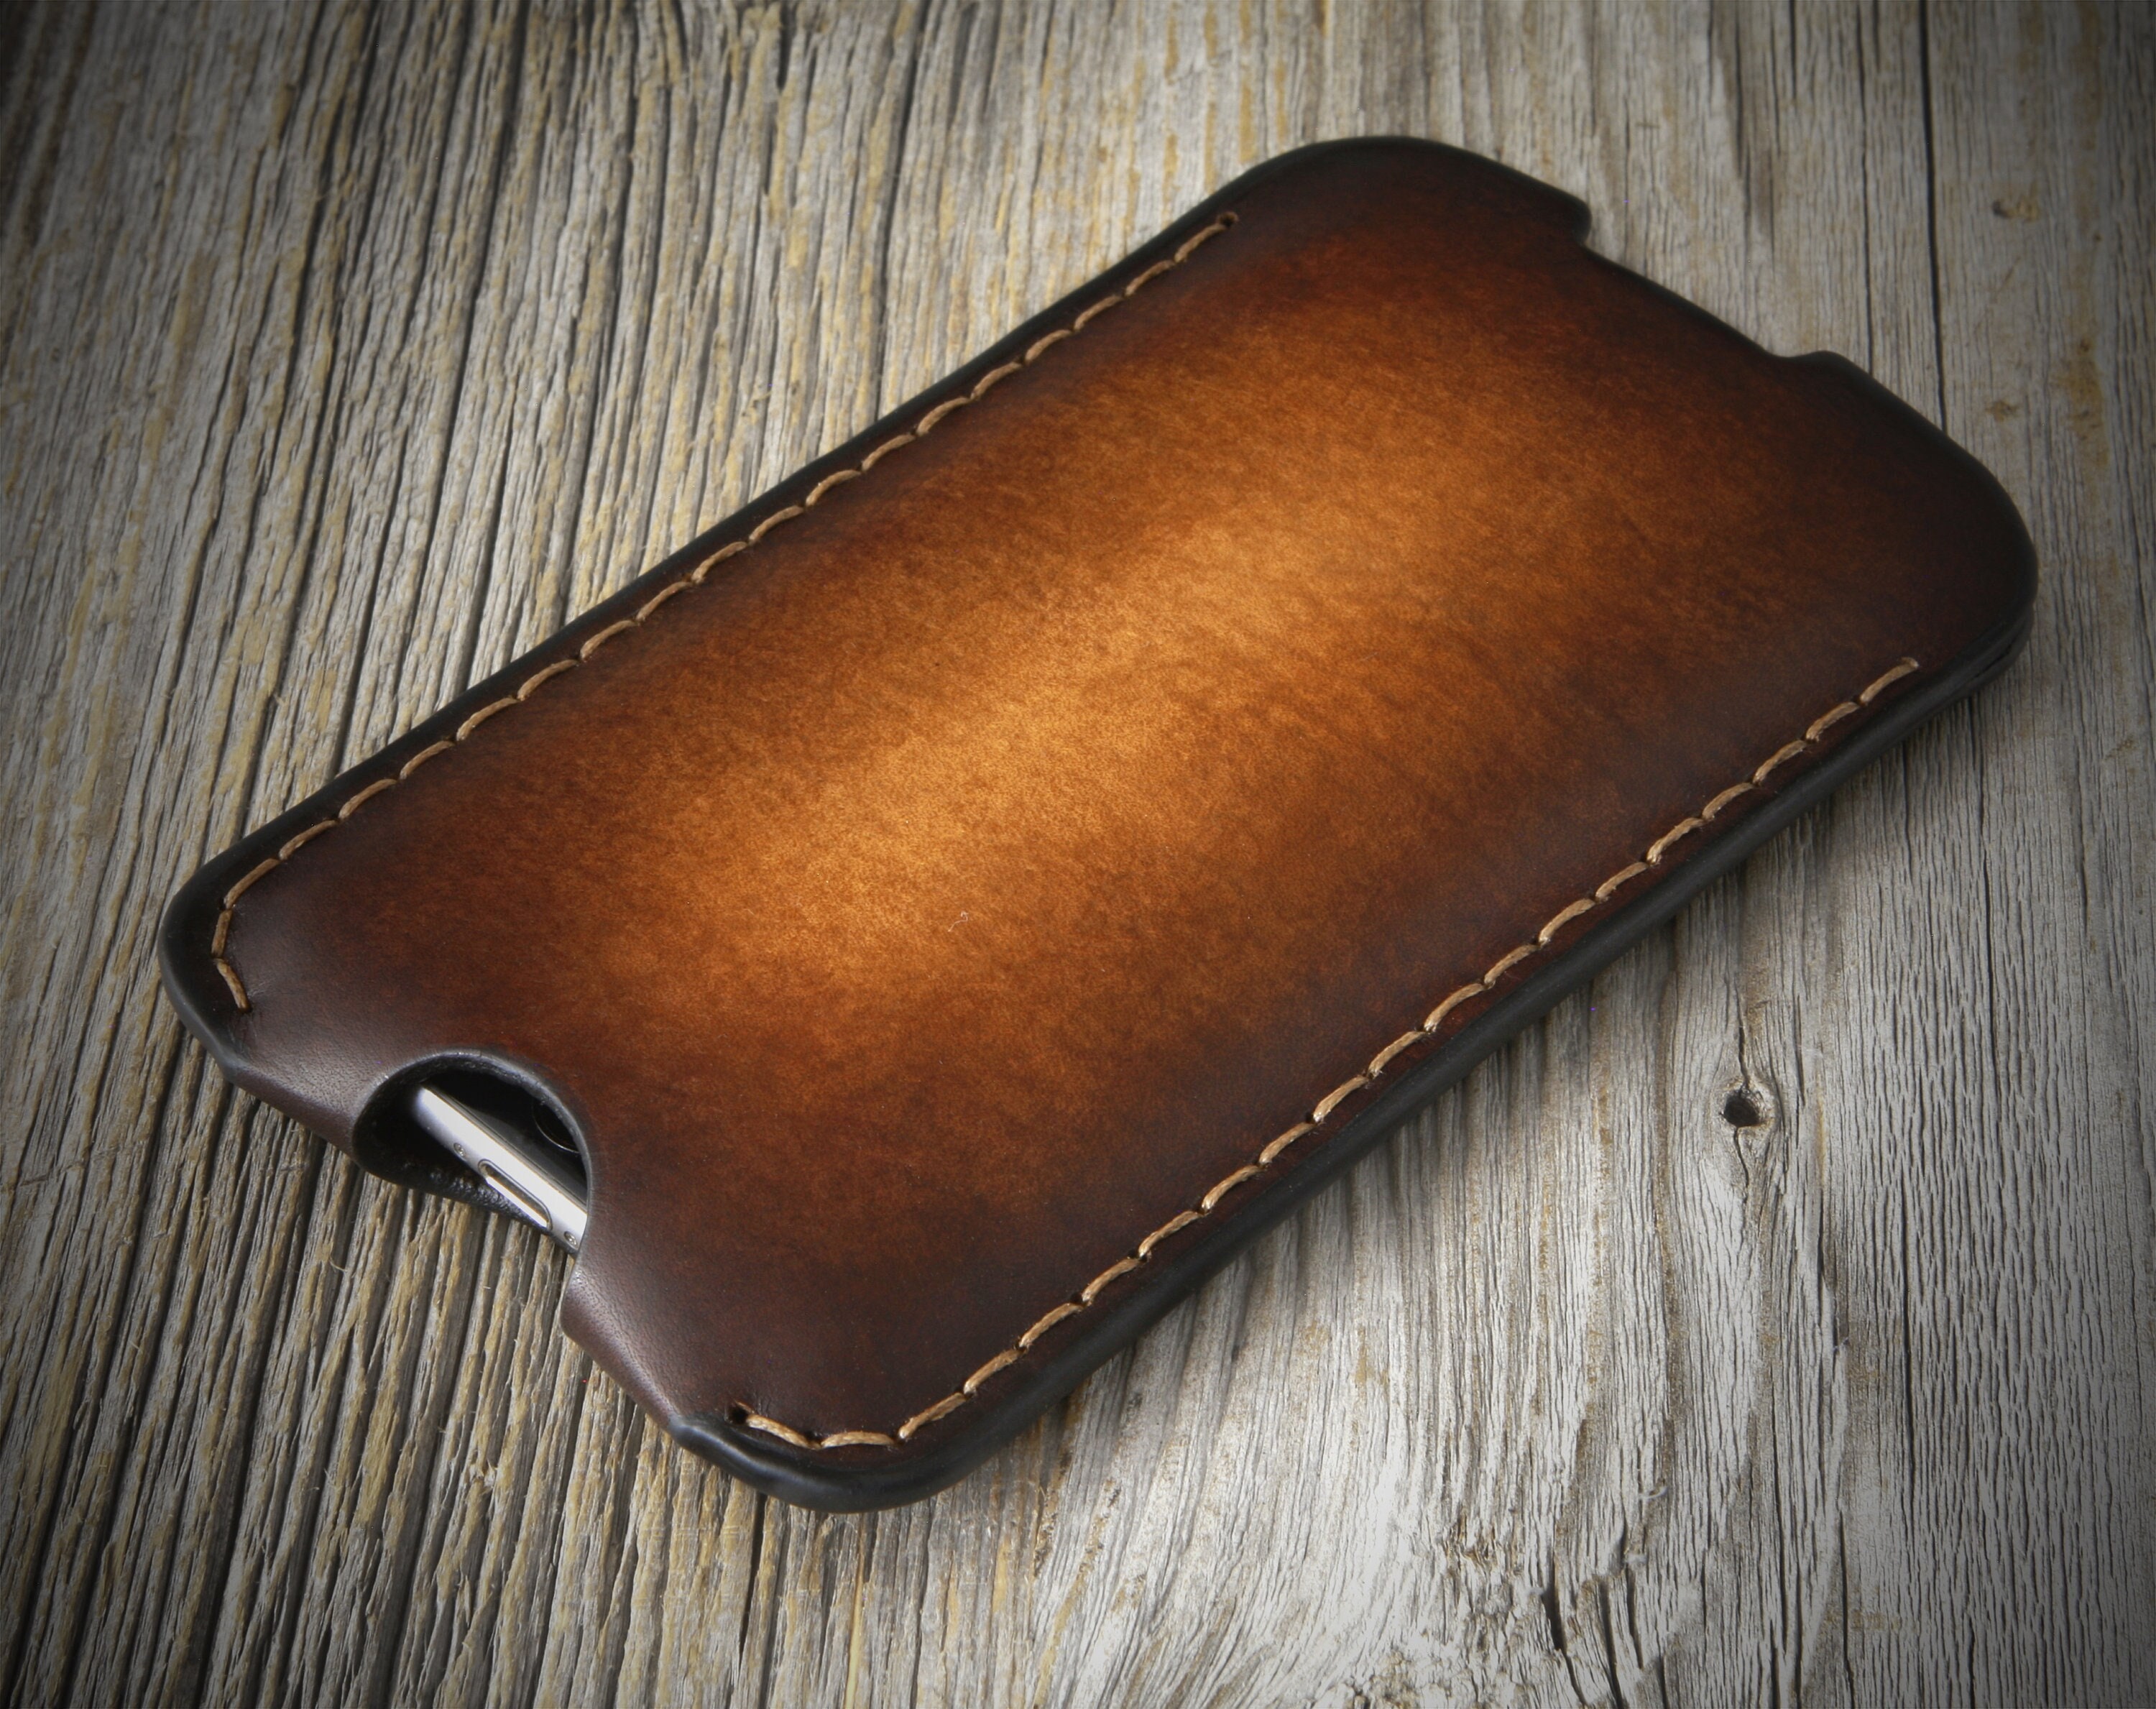 Comprar funda Leather Case para iPhone Xs Max Folio Azul Cabo de Apple